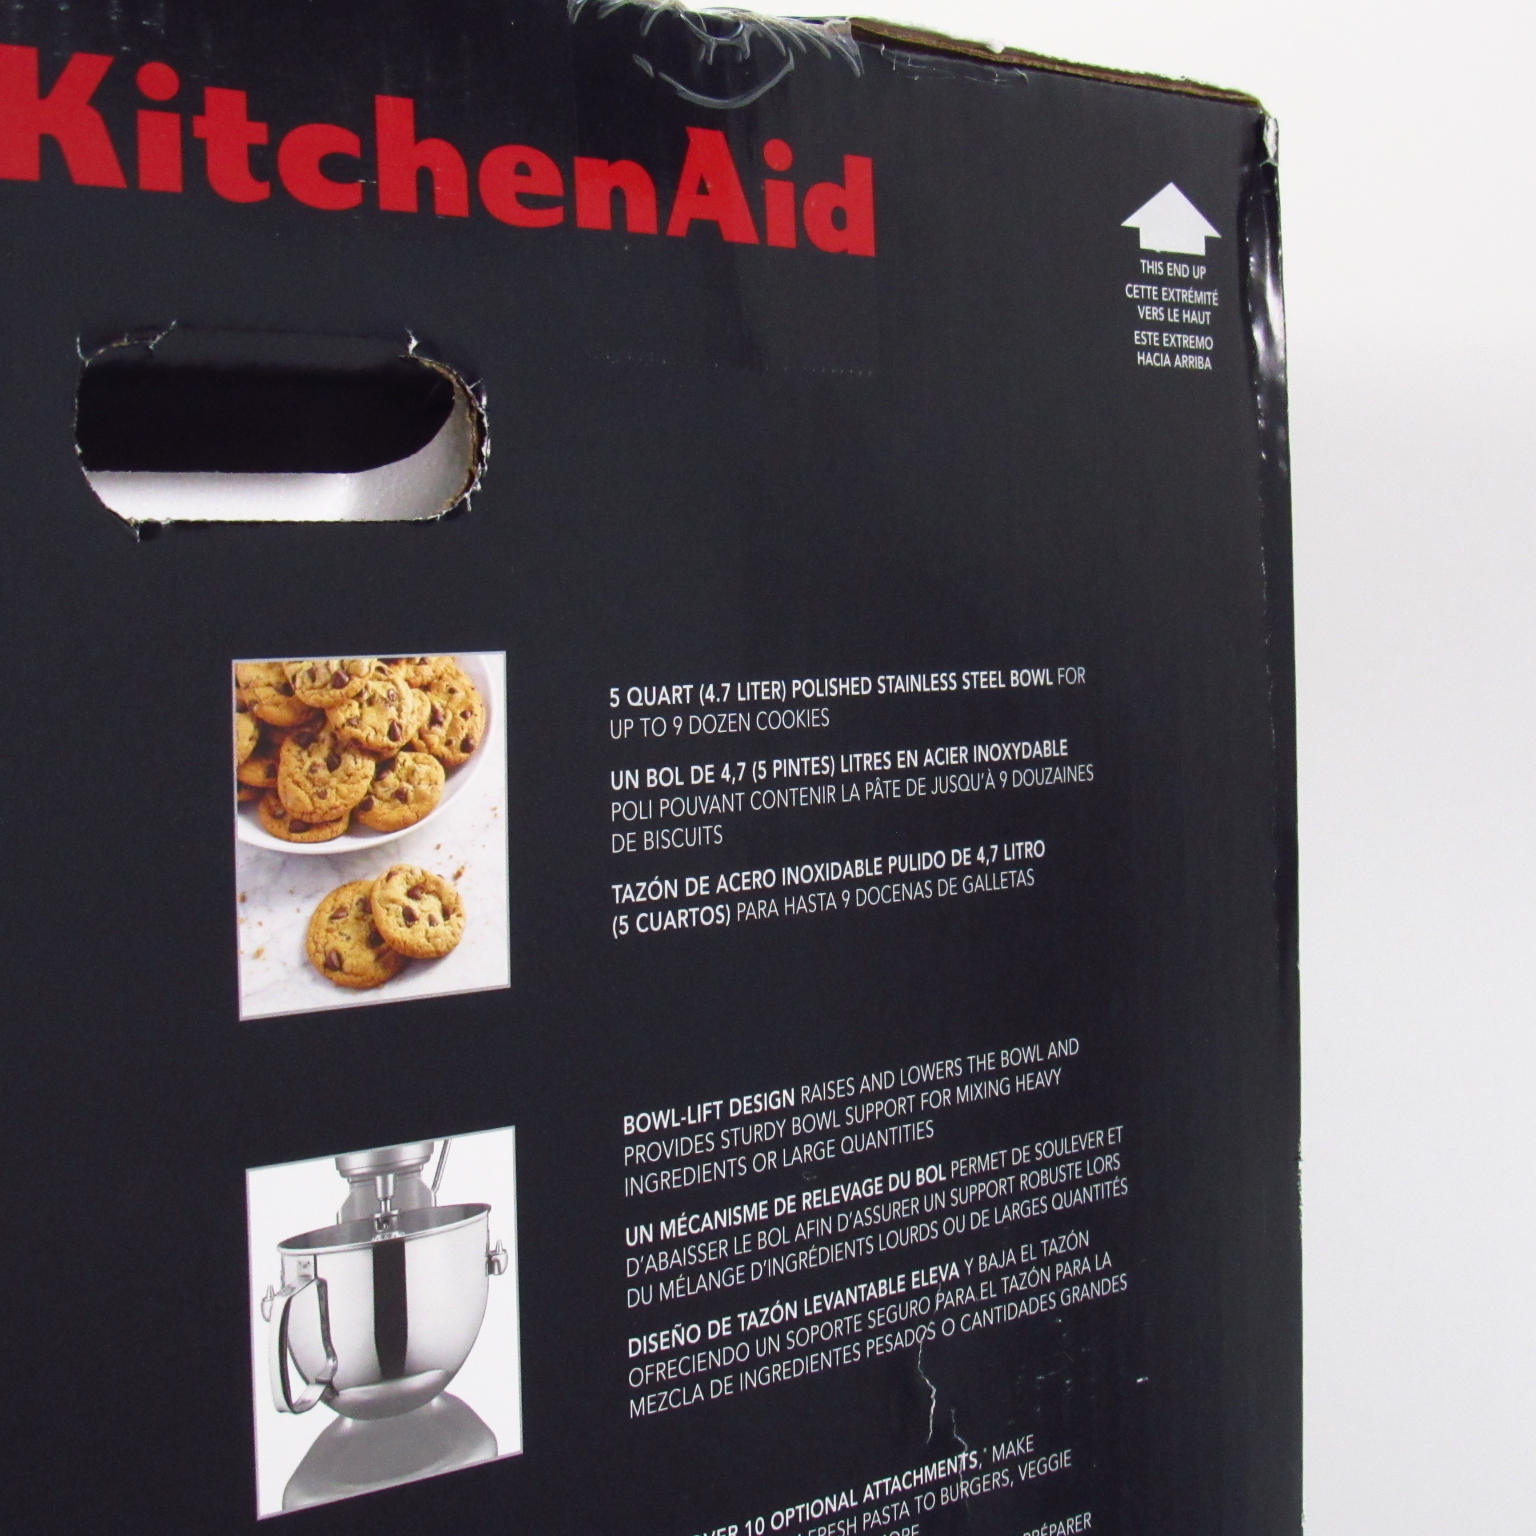 KitchenAid - Professional 5 Plus Series 5 Quart Bowl-Lift Stand Mixer - KV25G0XSL - Silver